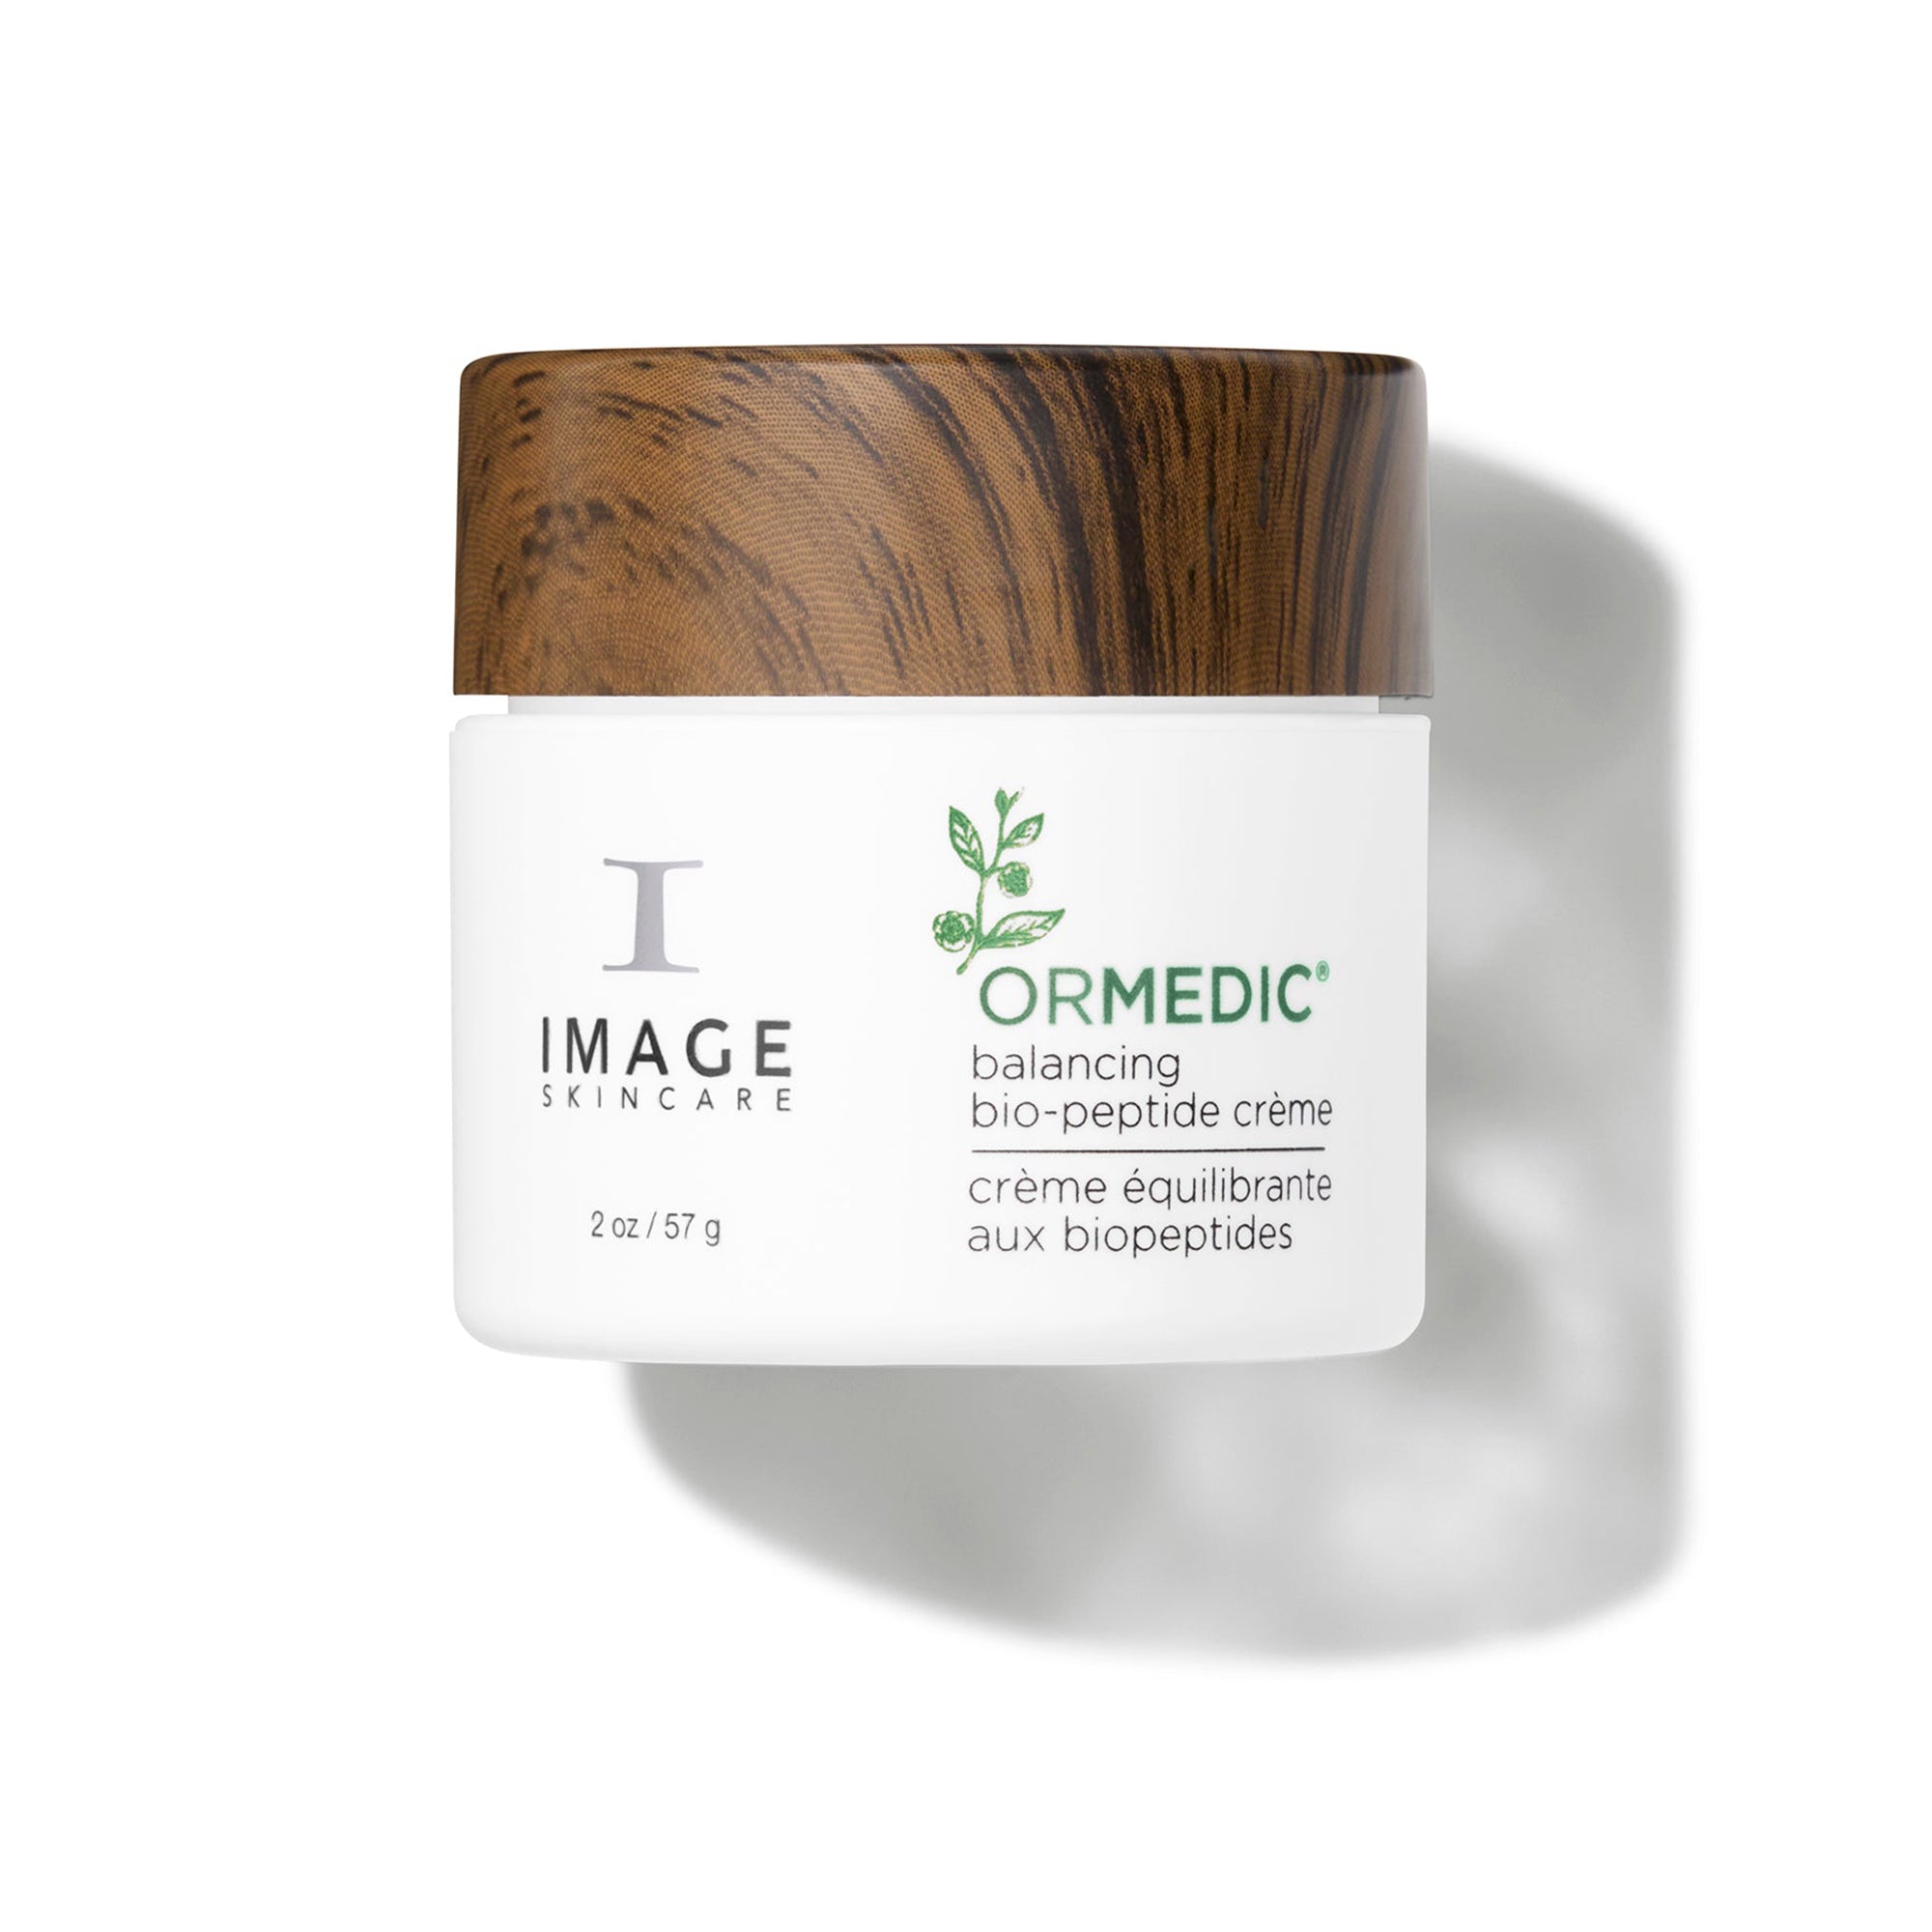 Image Skincare Ormedic Balancing Bio-Peptide Creme / 2OZ